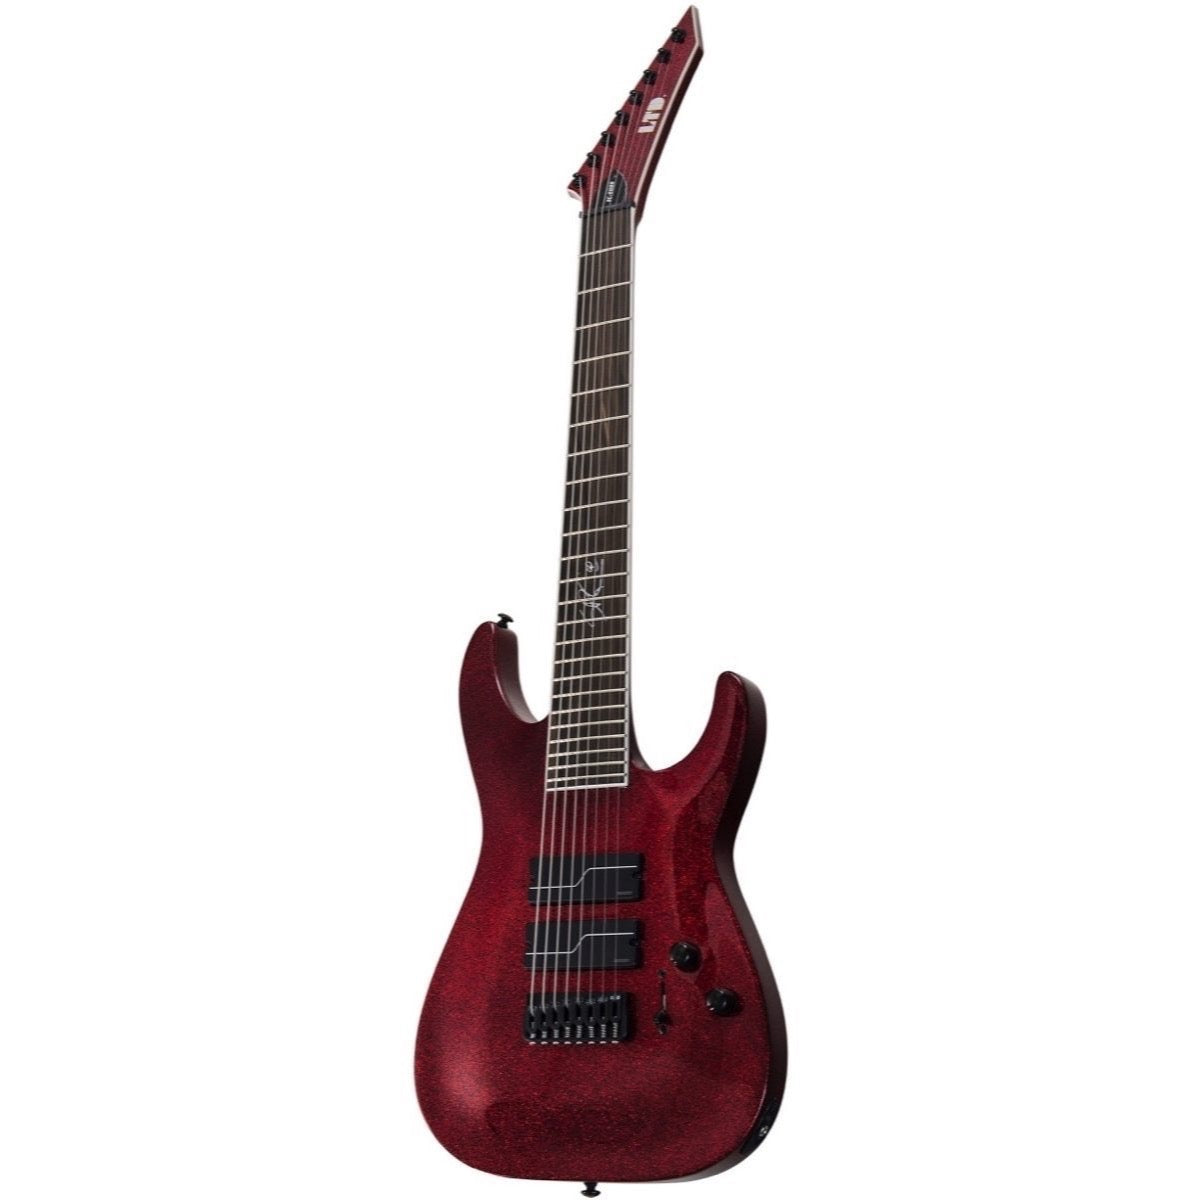 ESP LTD Stephen Carpenter SC-608B Baritone Electric Guitar, 8-String (with Case), Red Sparkle